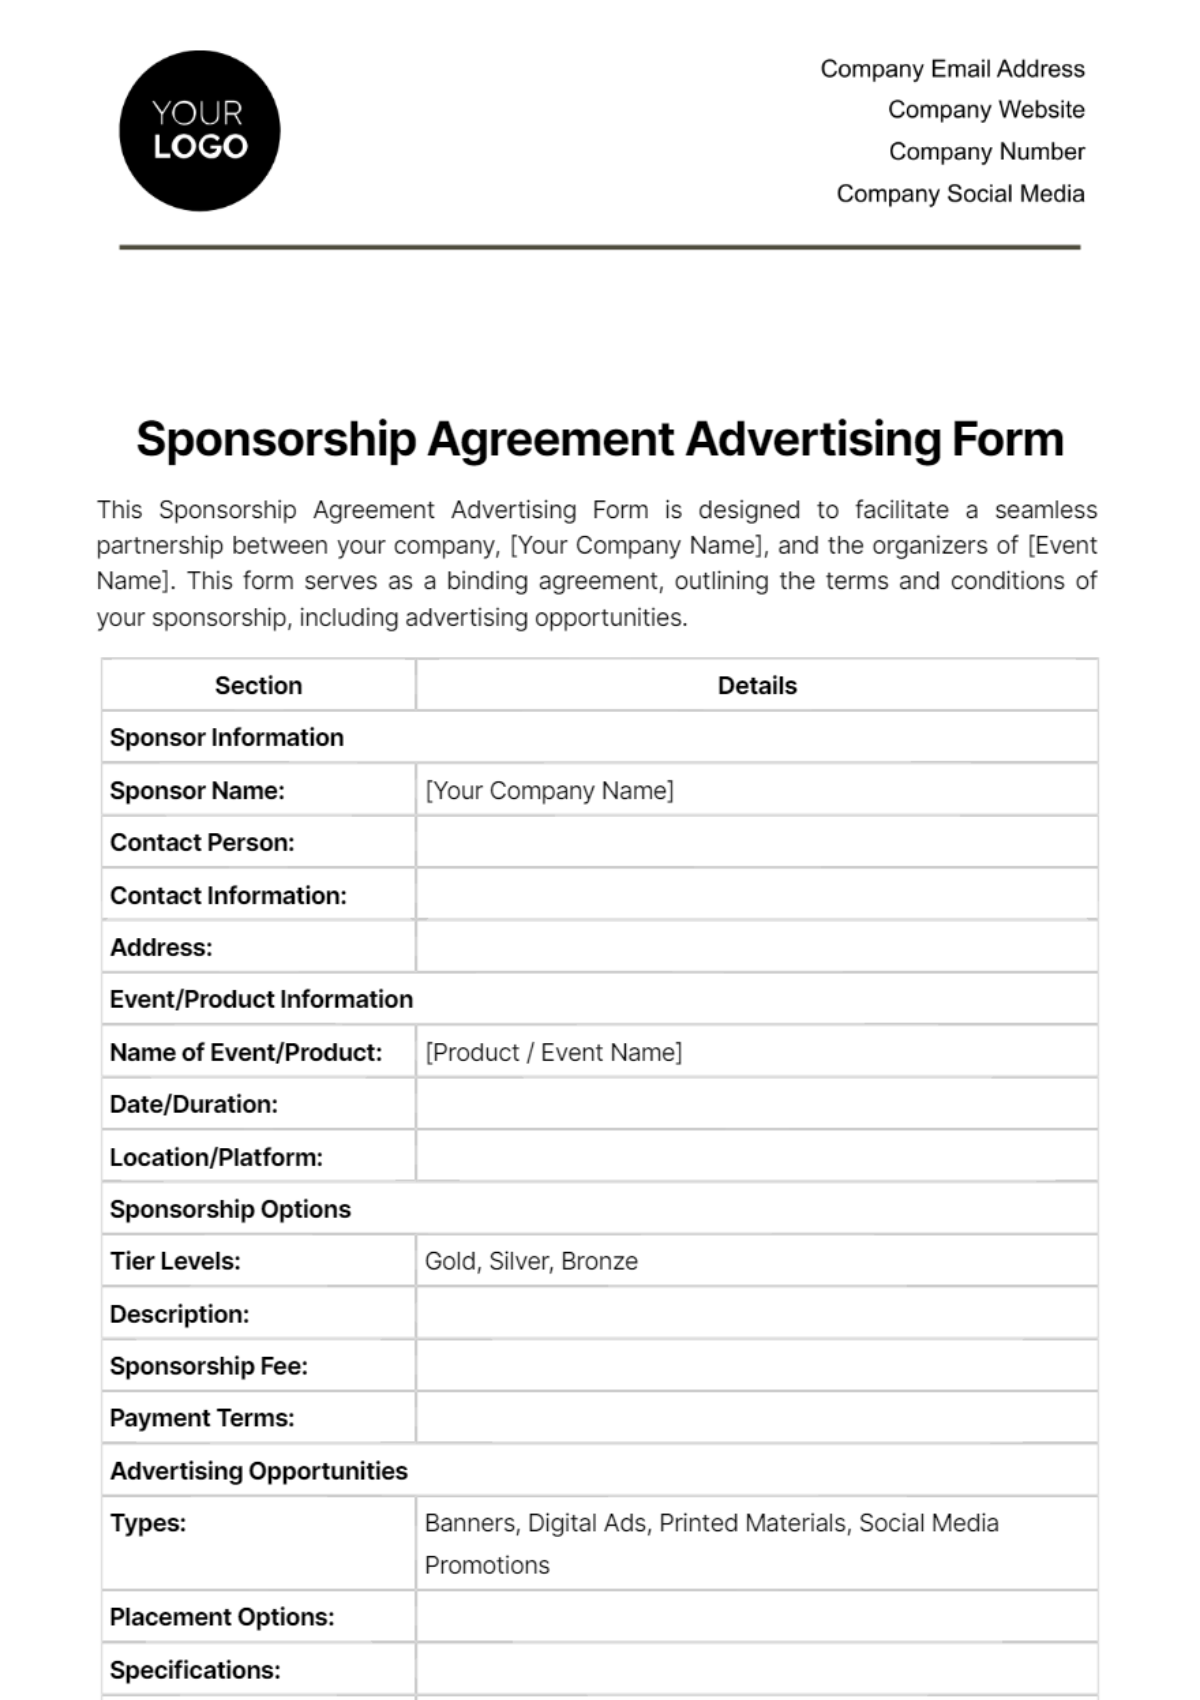 Sponsorship Agreement Advertising Form Template